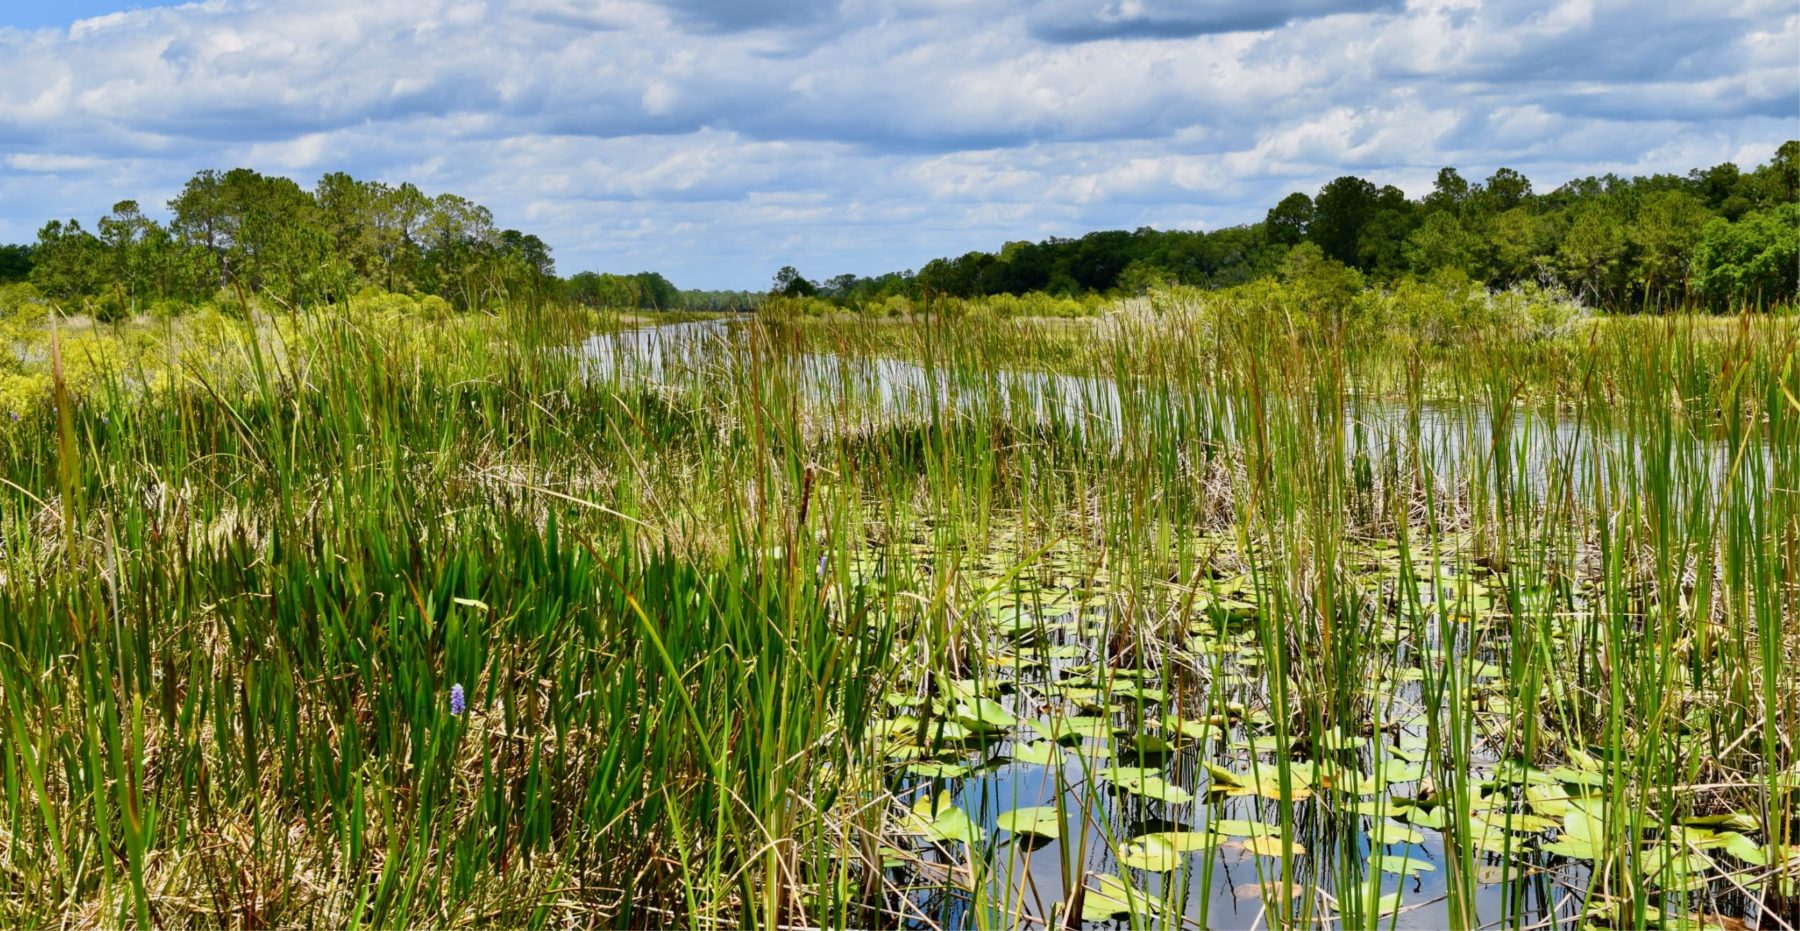 Grass and wetlands in Sunbridge community, St. Cloud, Florida in Metro Orlando.